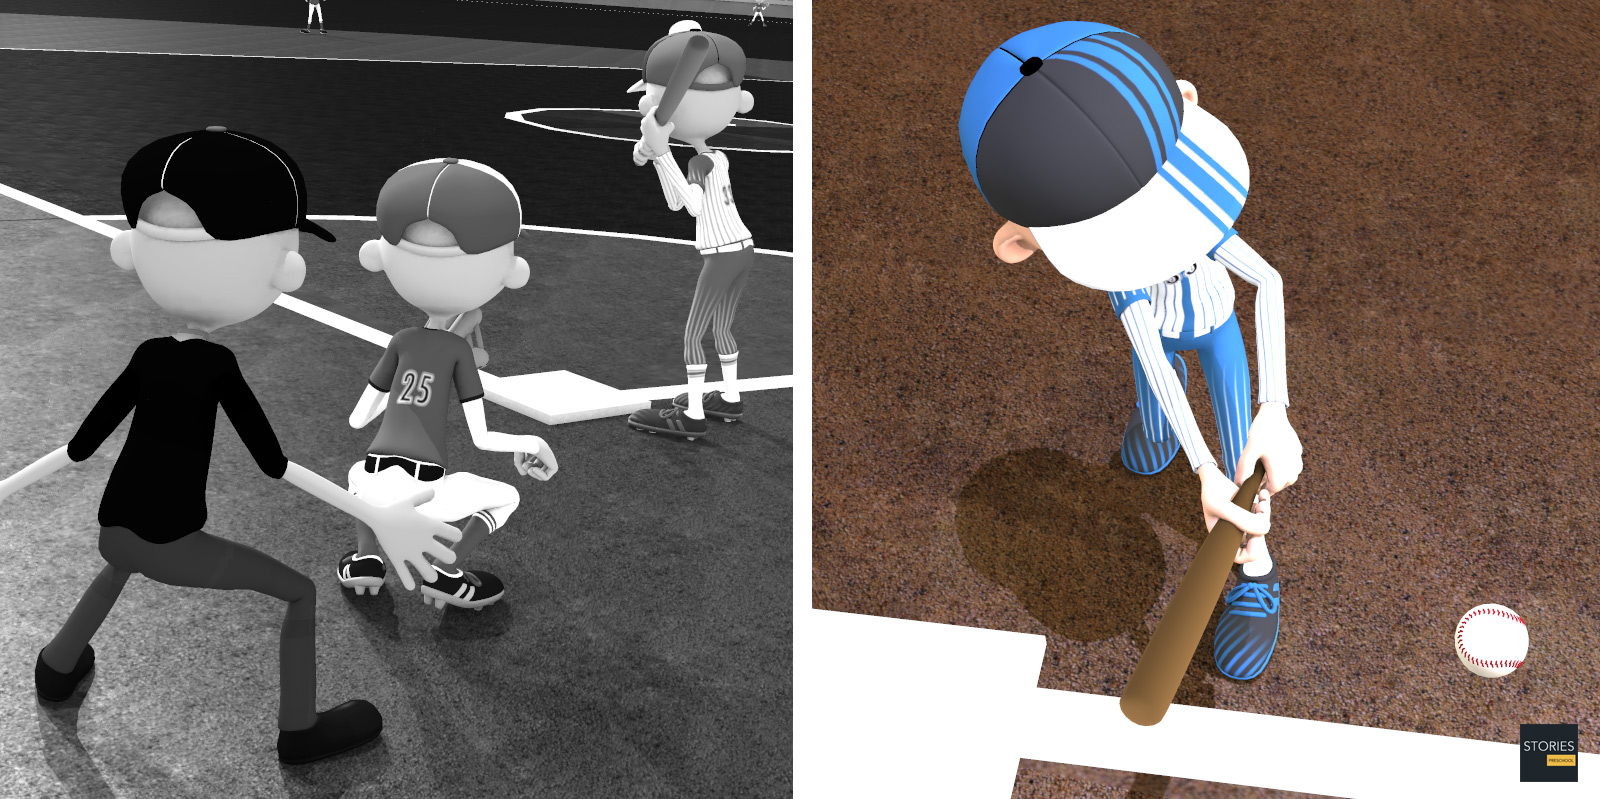 Baseball | Story Preschool